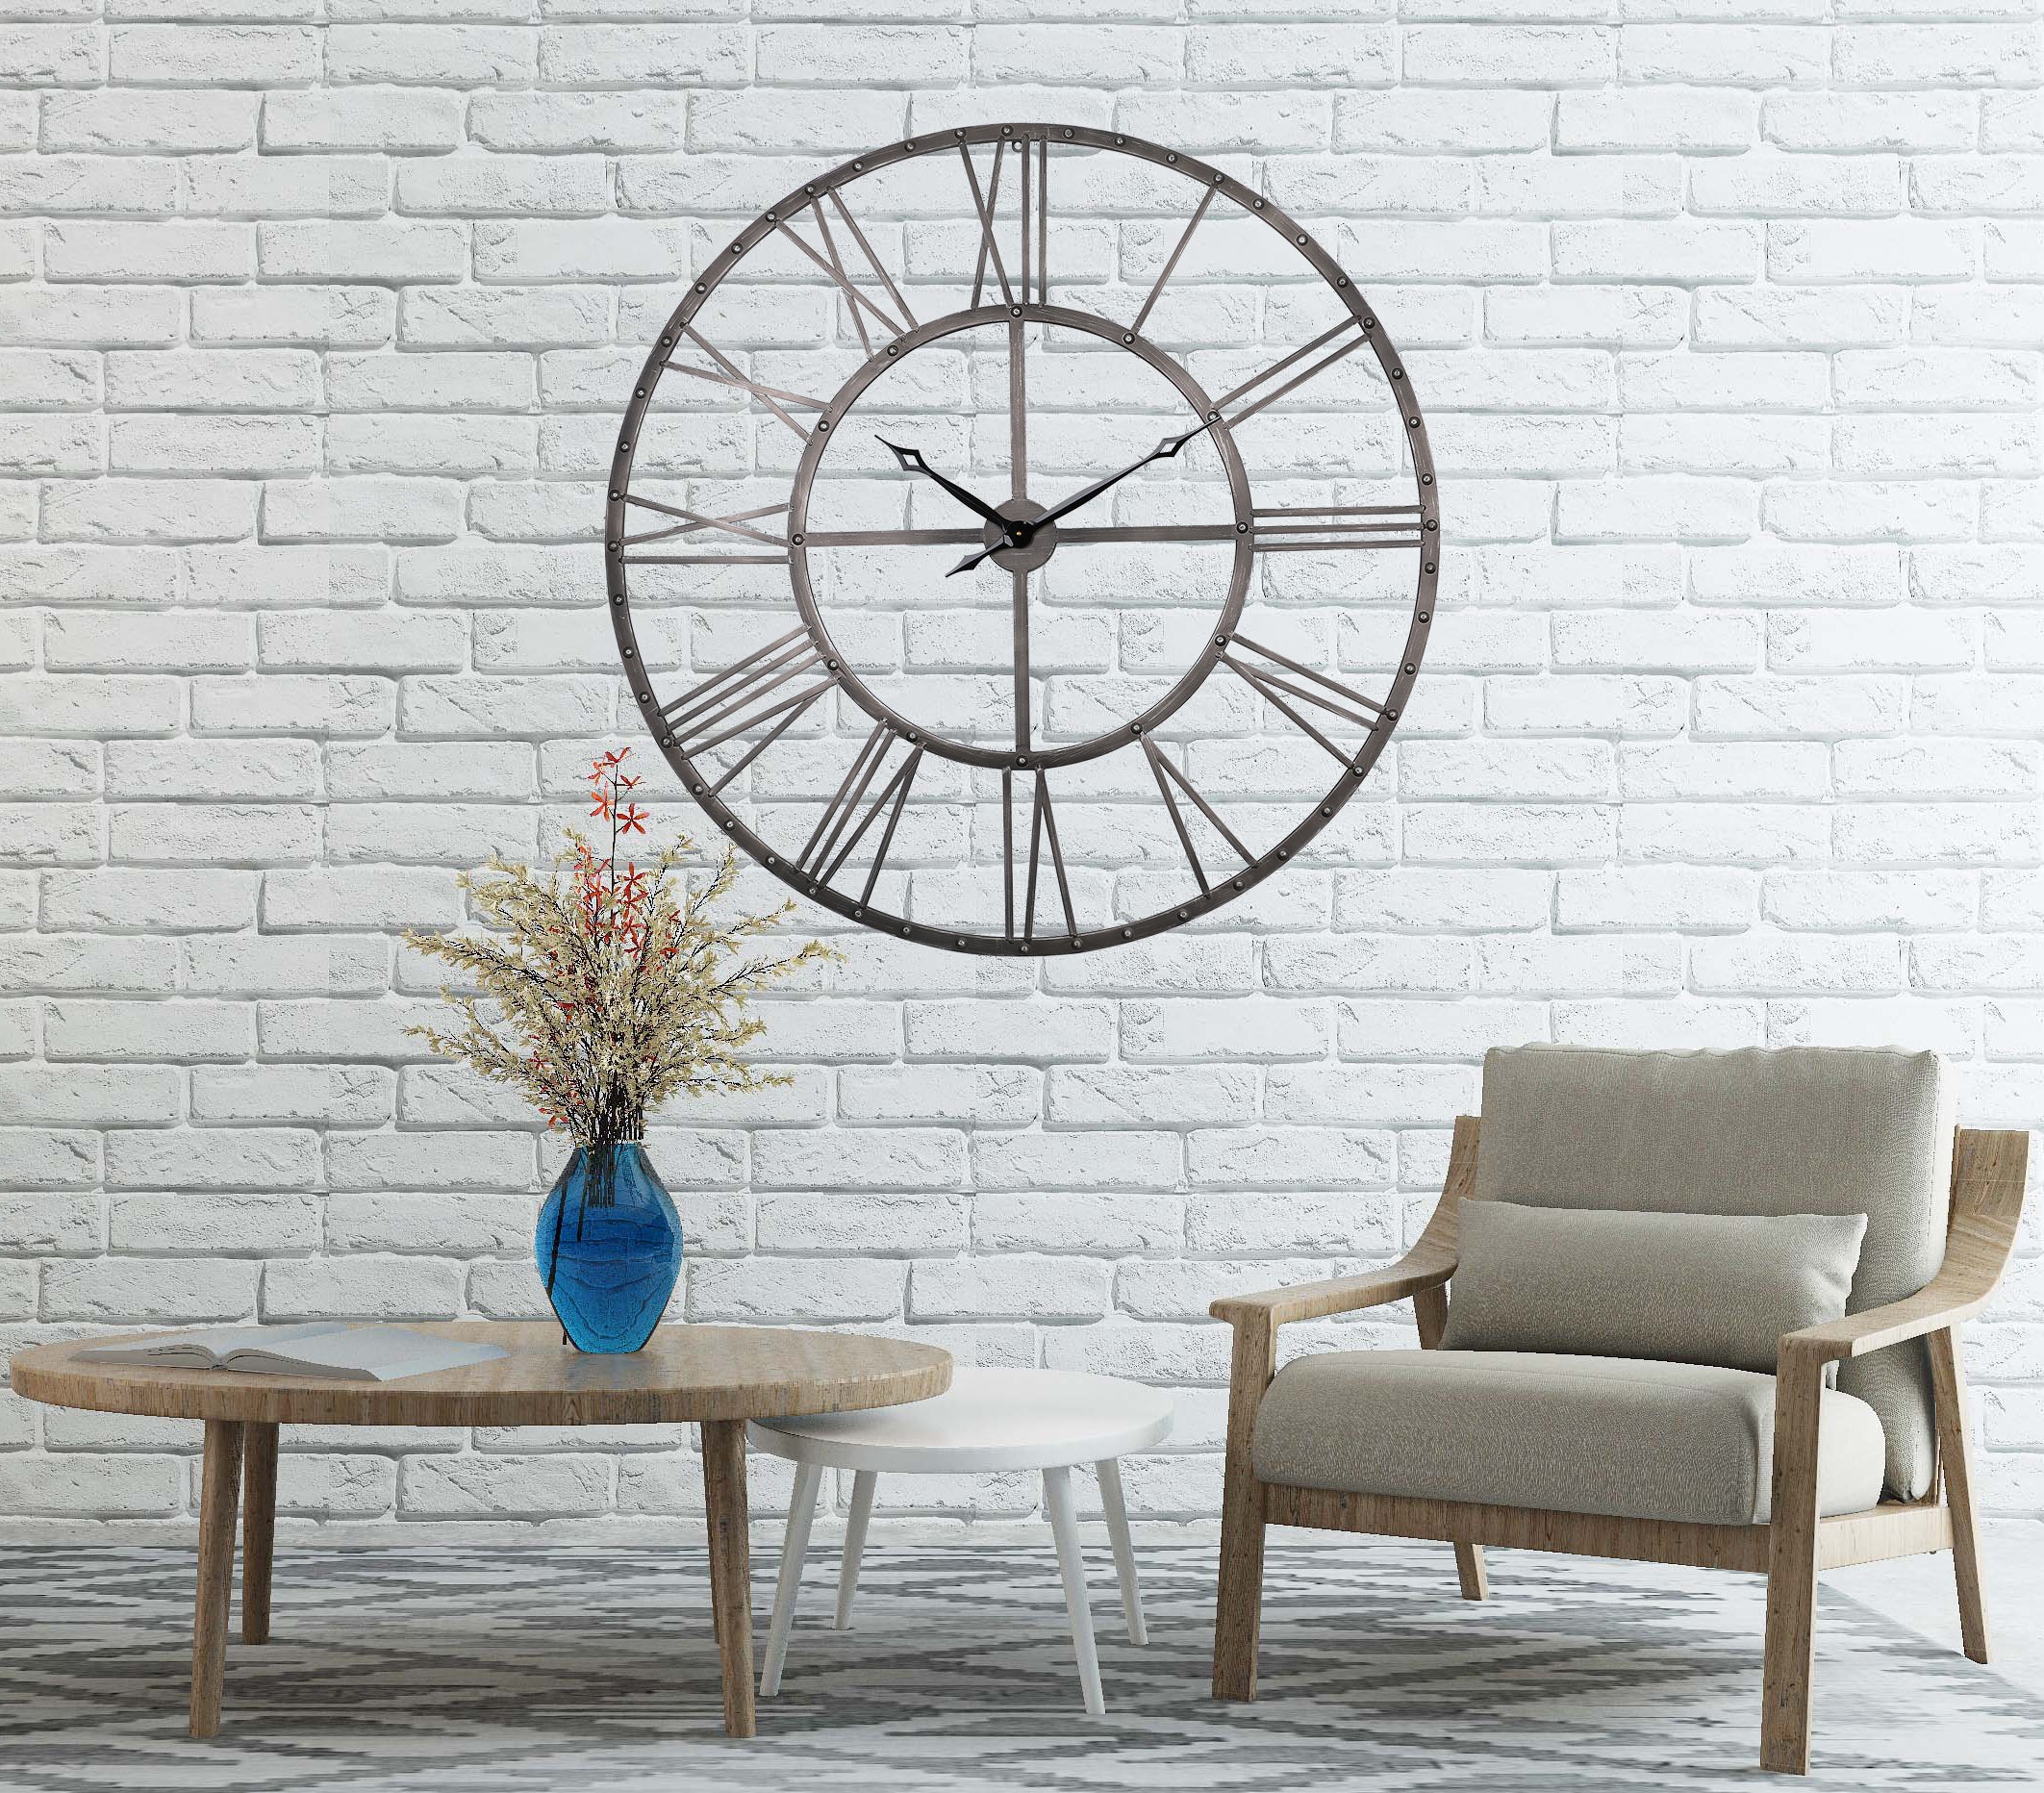 Loft97 CL25GY Rivet Roman Industrial Oversize Wall Clock, Gray, 45